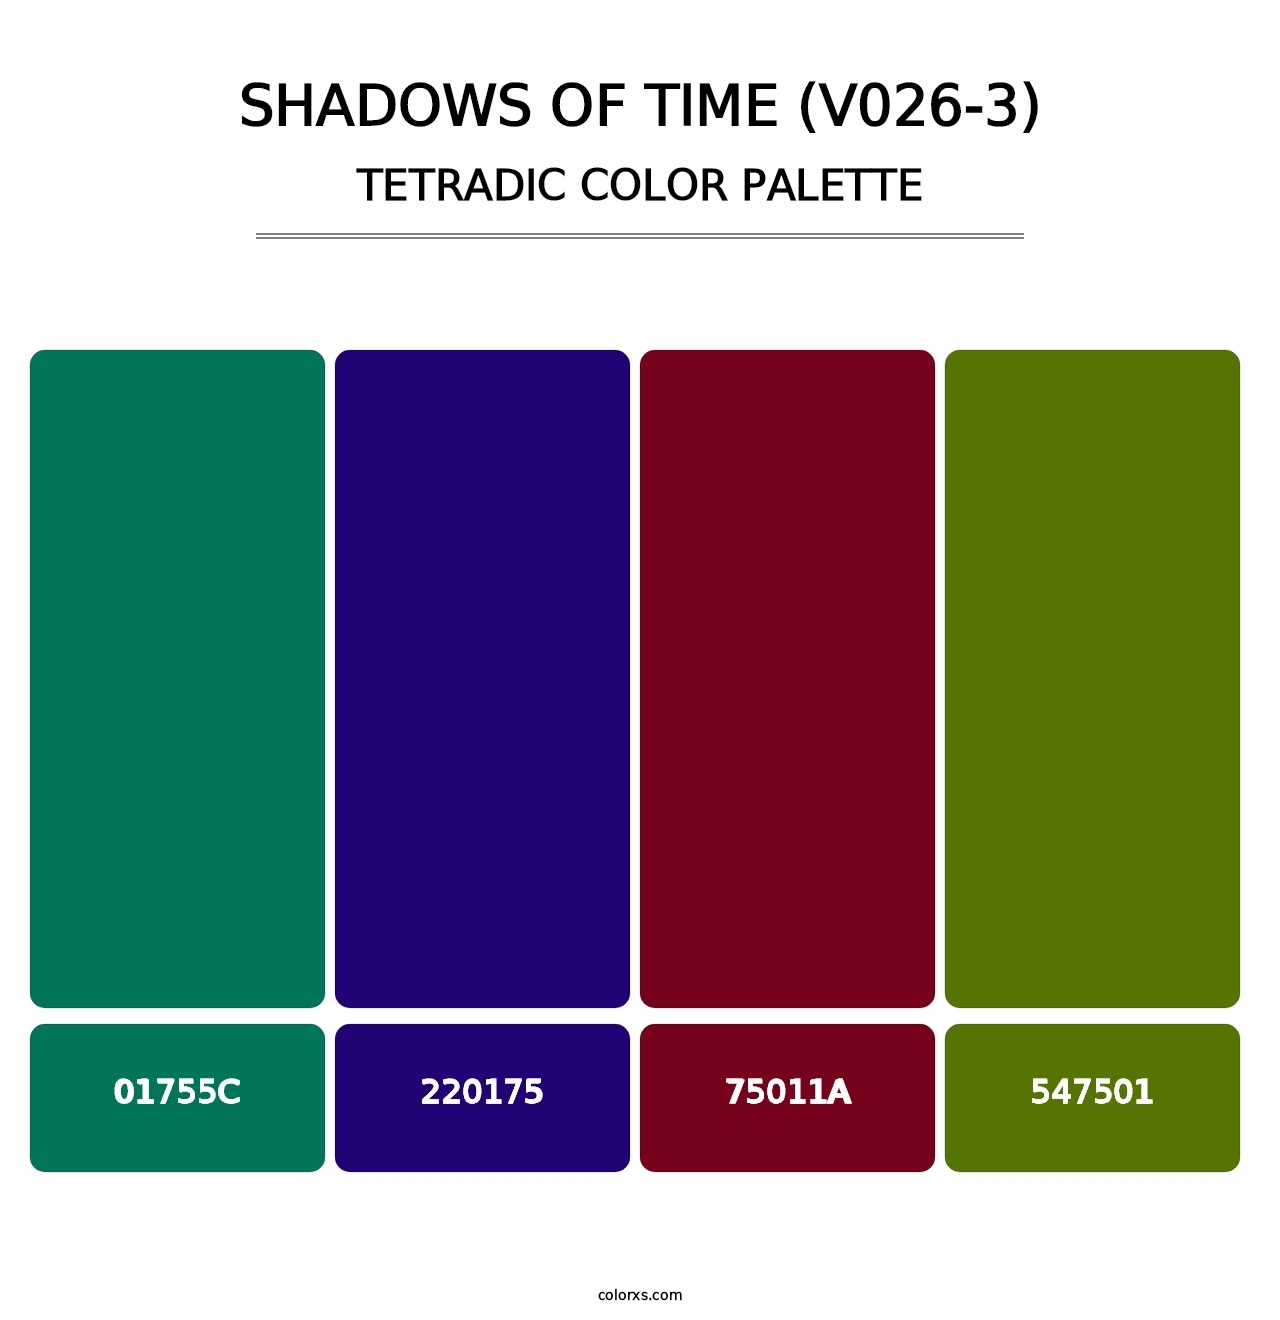 Shadows of Time (V026-3) - Tetradic Color Palette